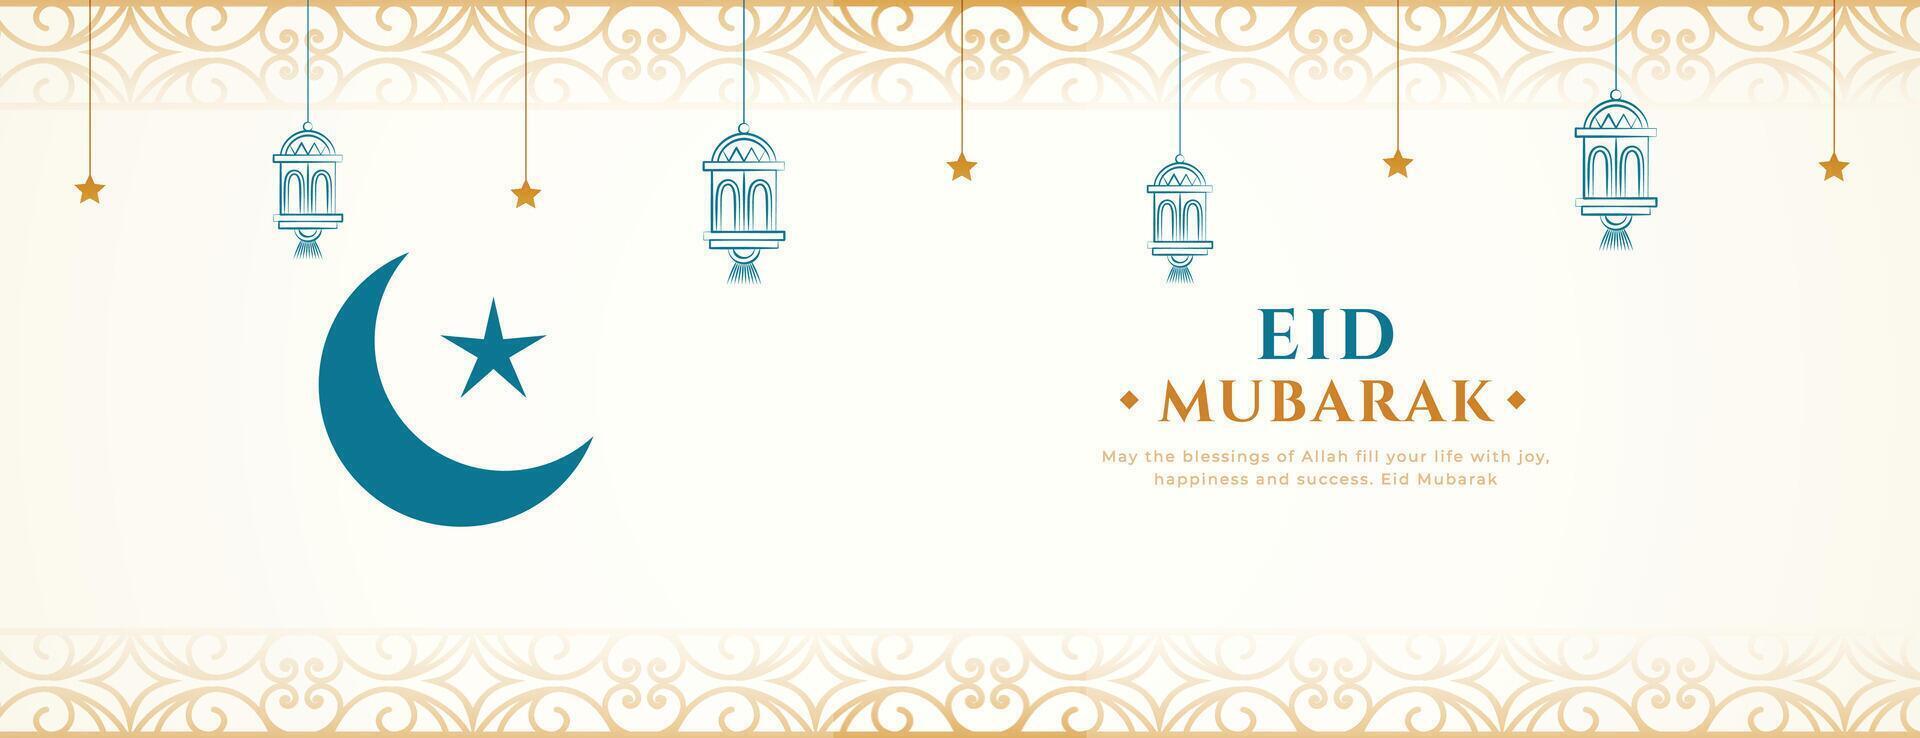 eid mubarak veille invitation fond d'écran avec arabe décor vecteur